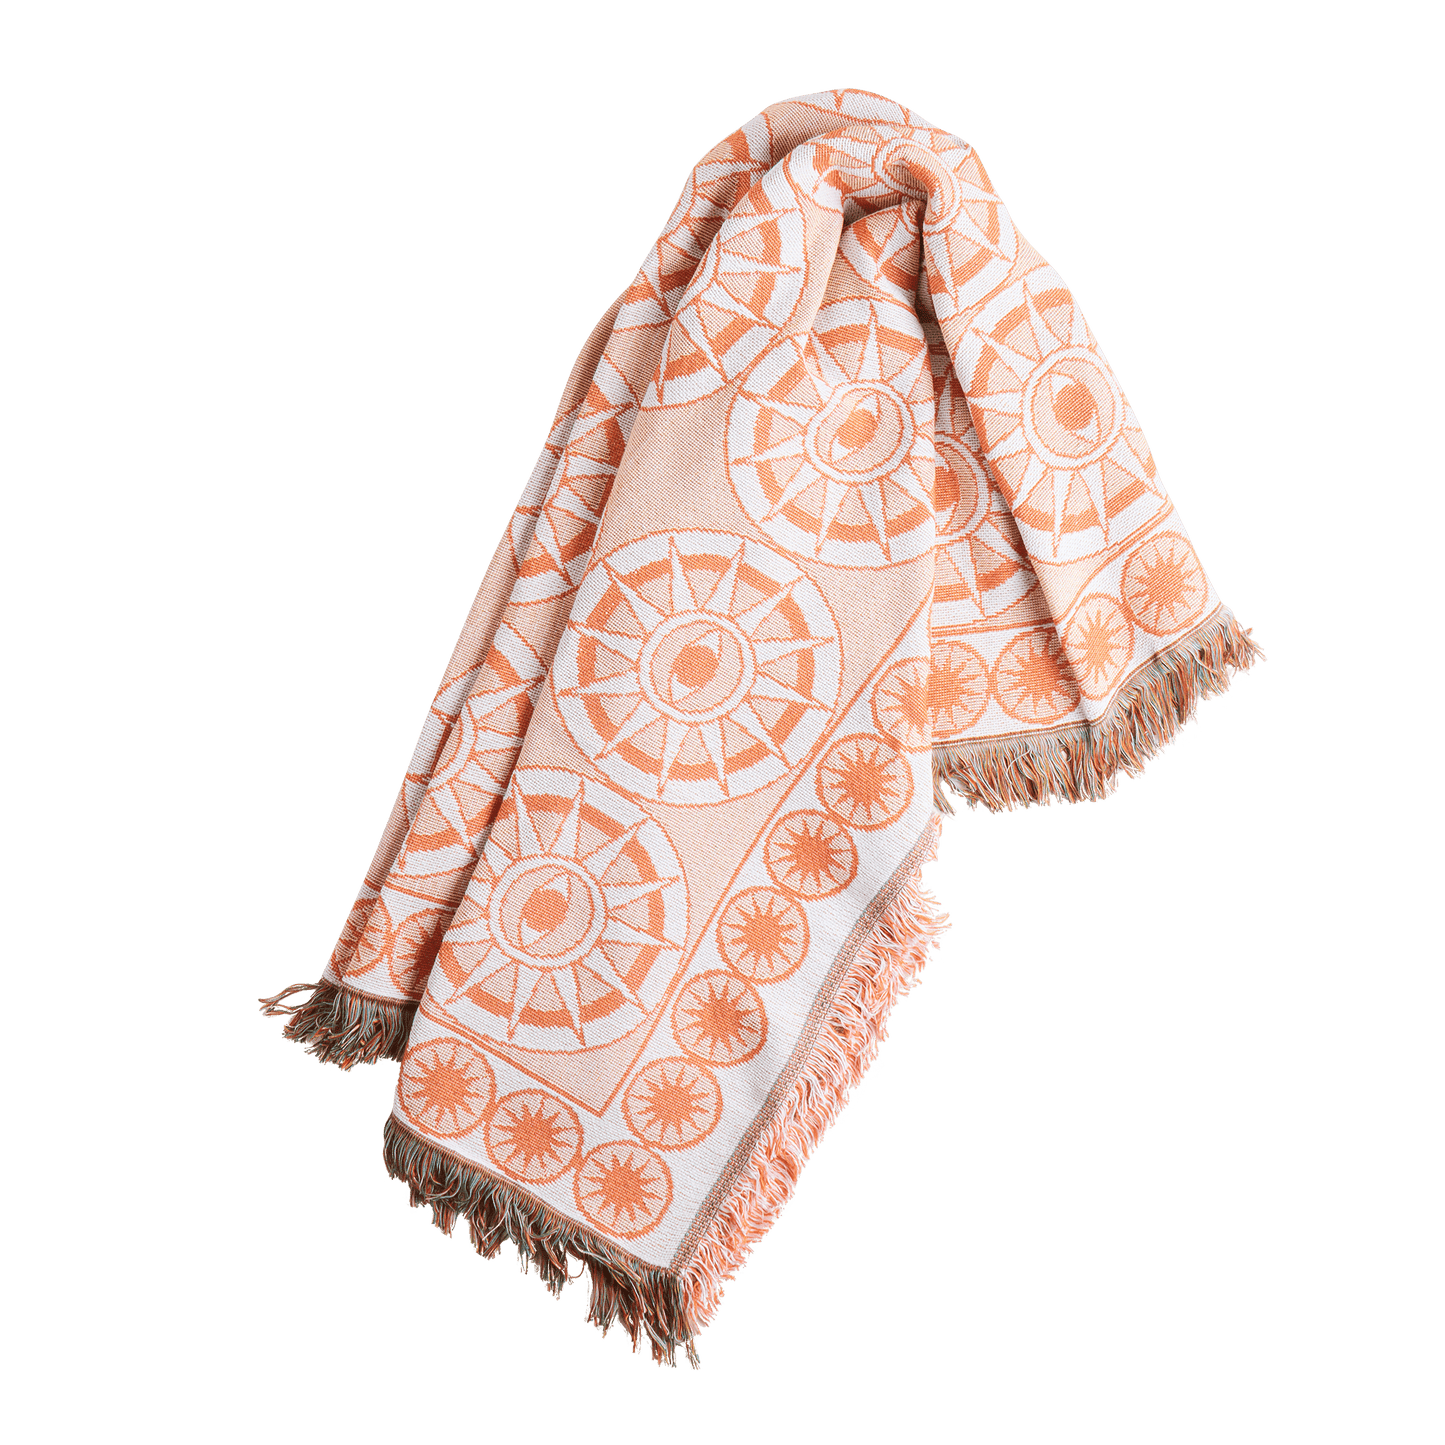 The Nazar Woven Blanket in Peach